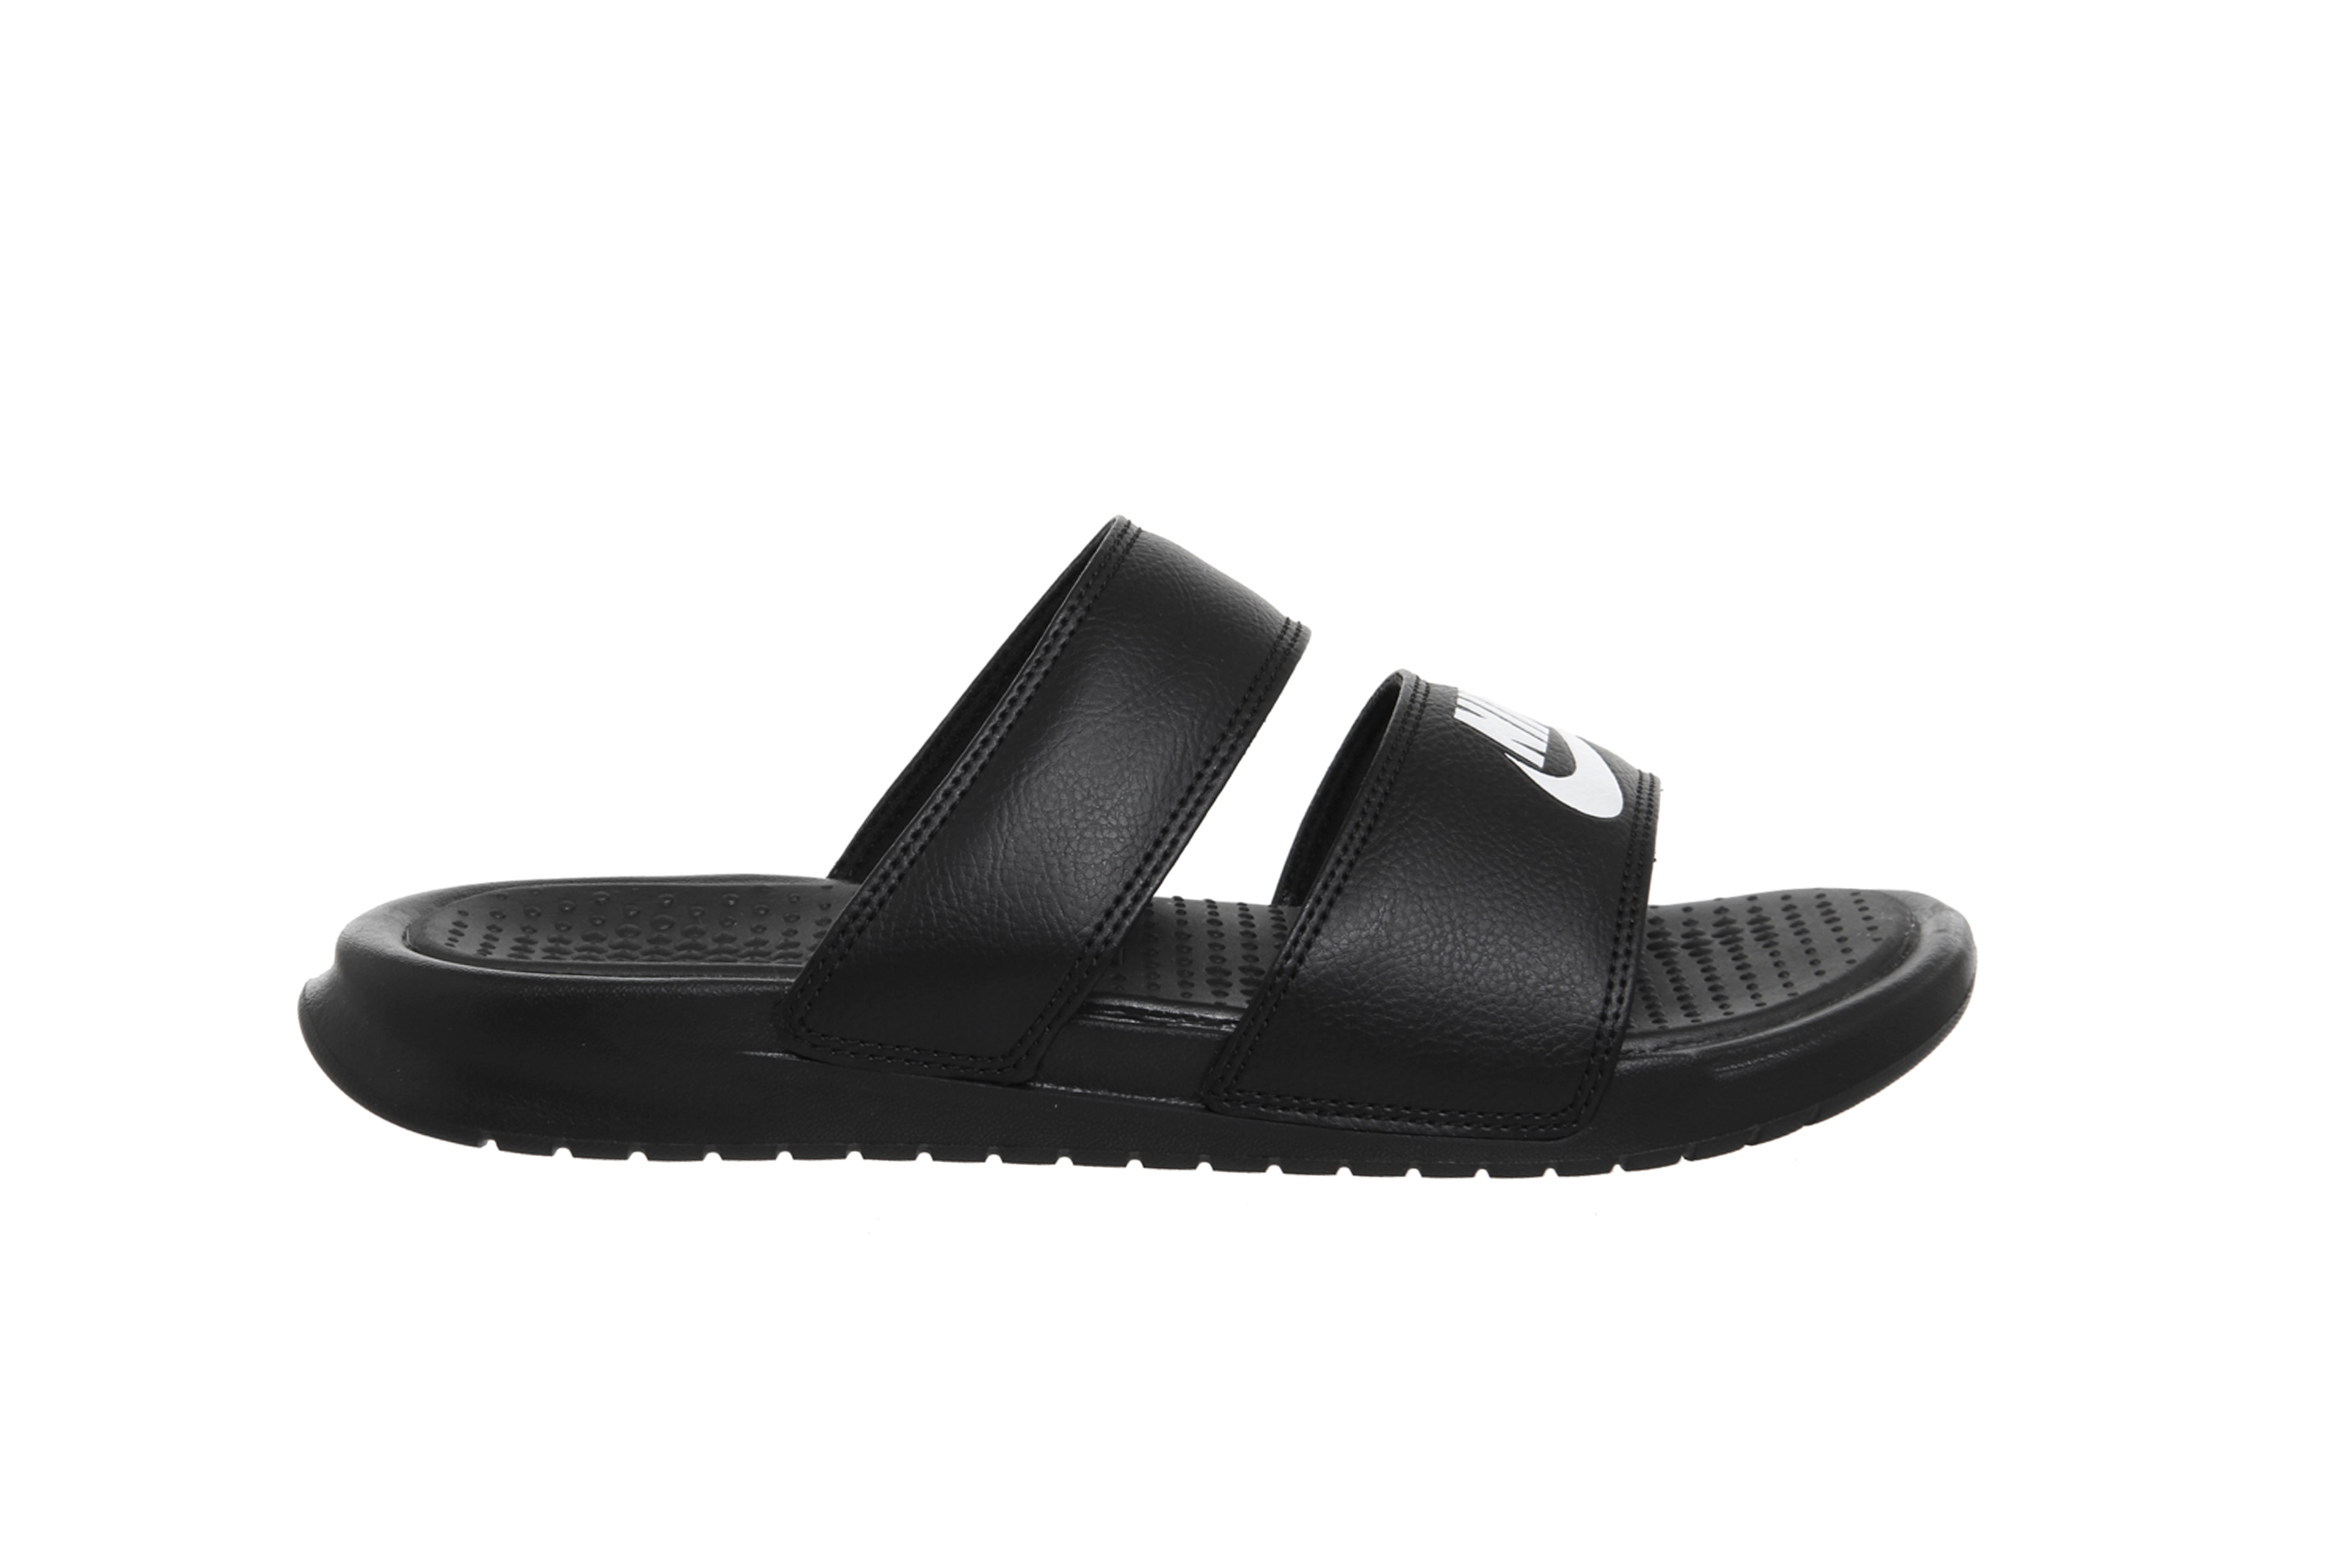 Nike Double Strap Slides in White/Black 